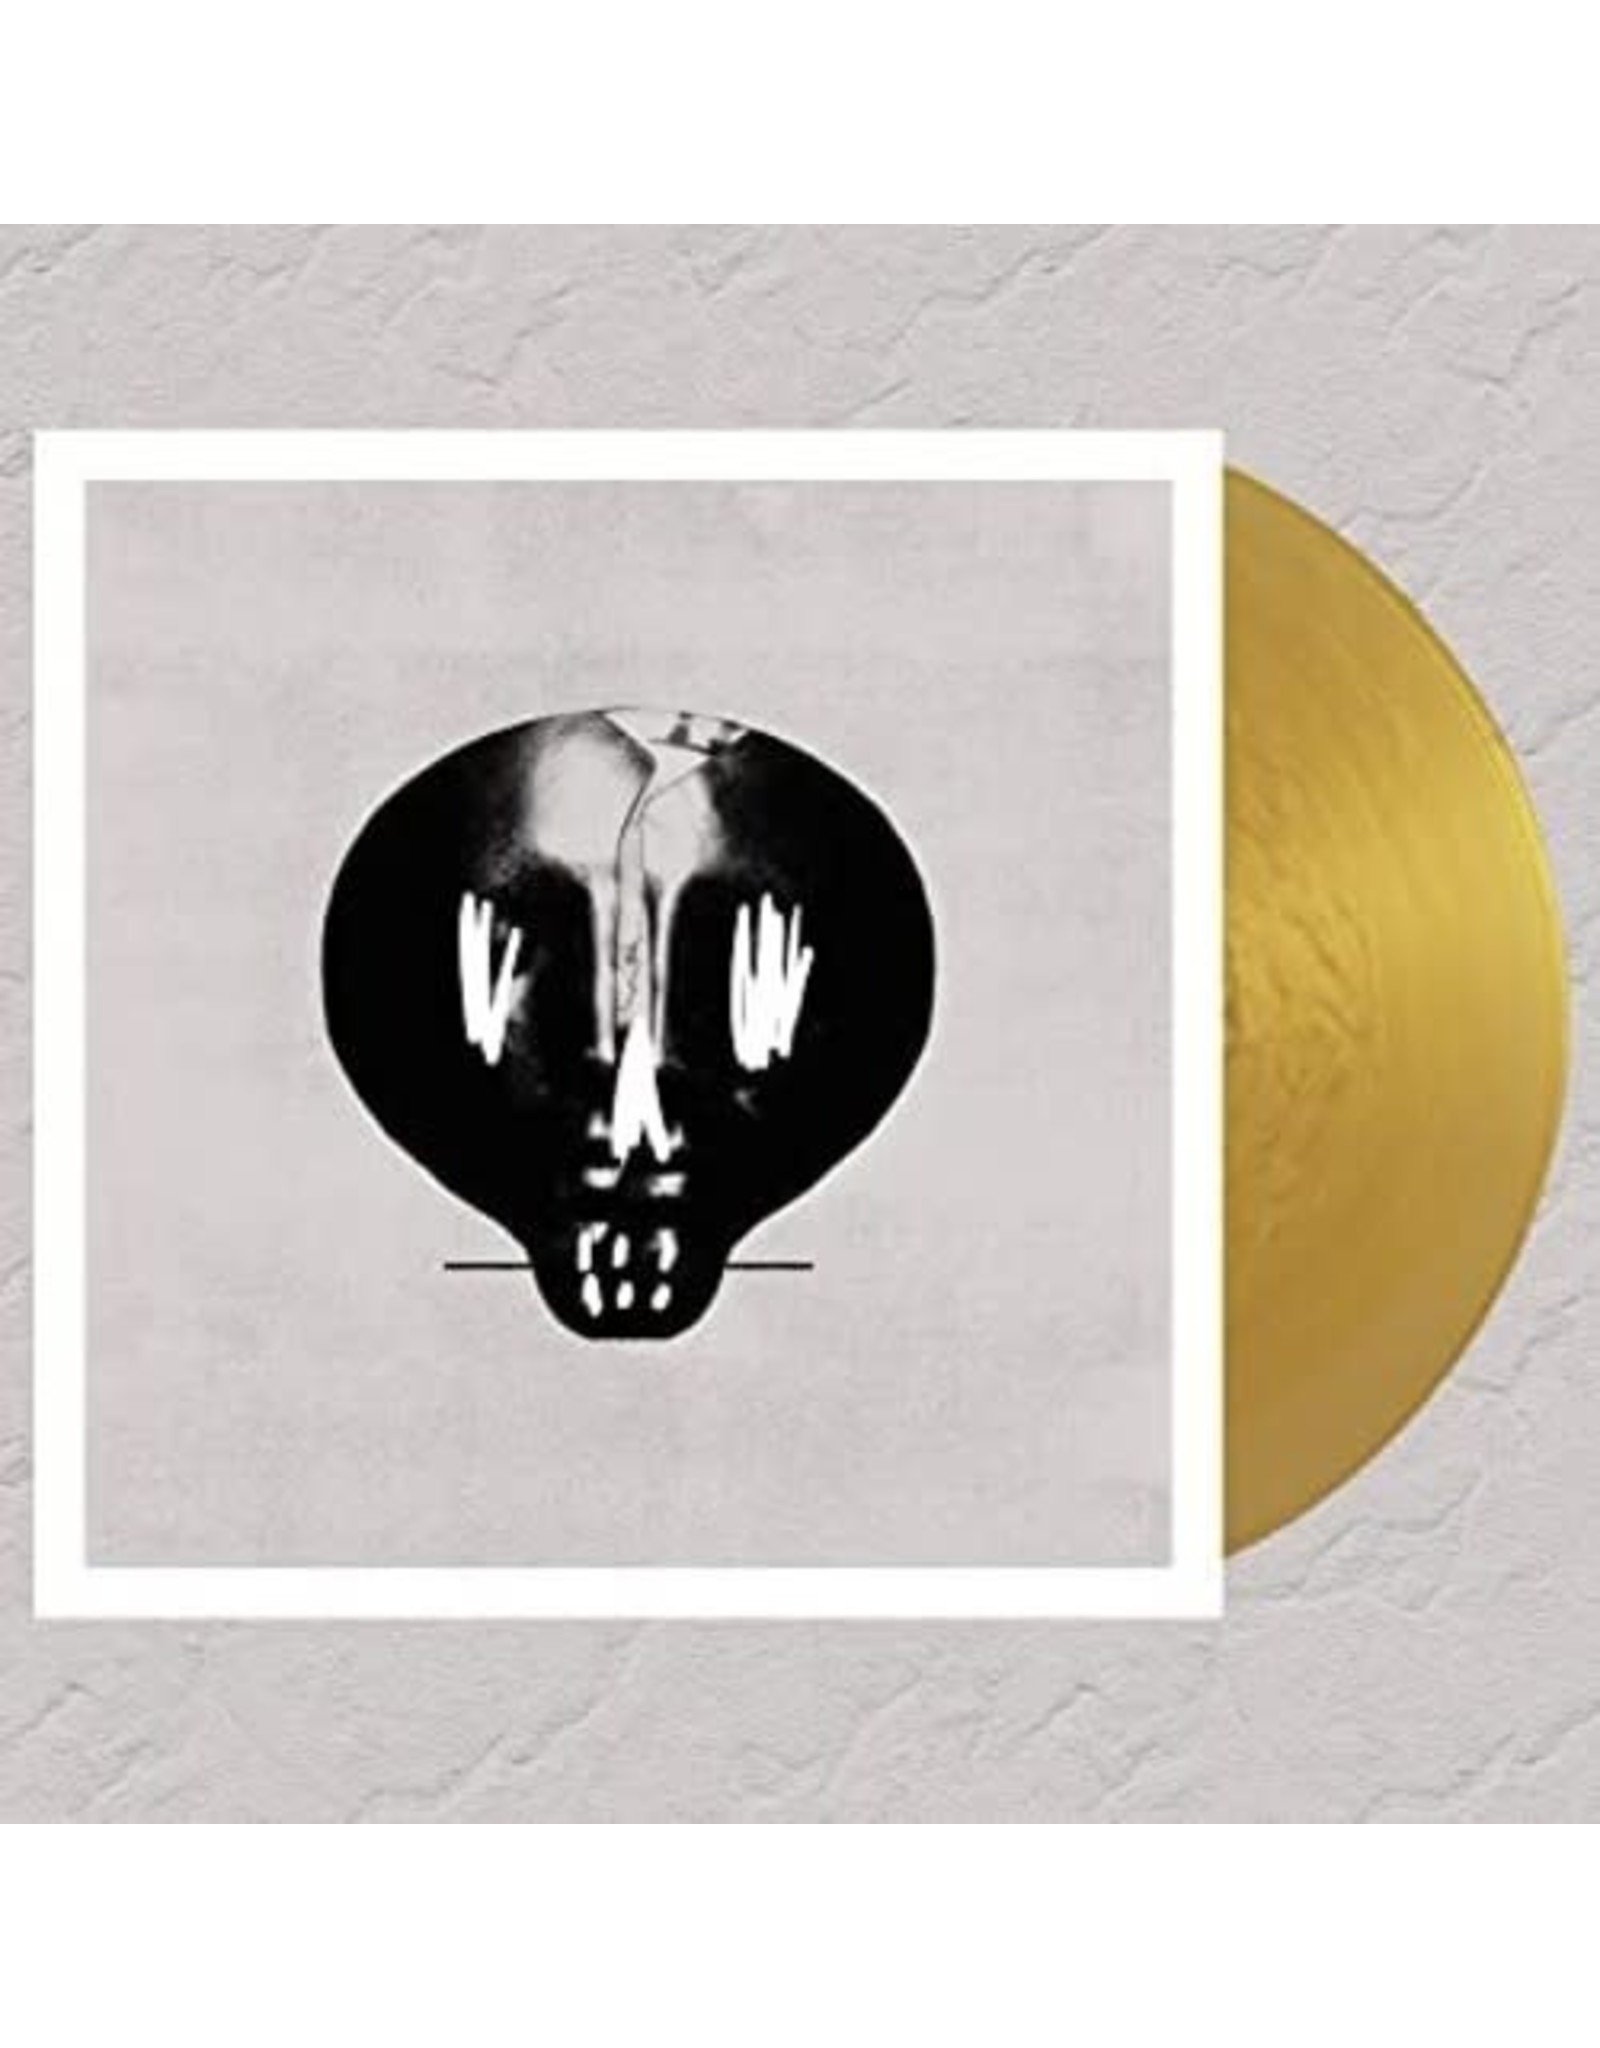 Bullet for My Valentine - Bullet for My Valentine [Gold Vinyl]